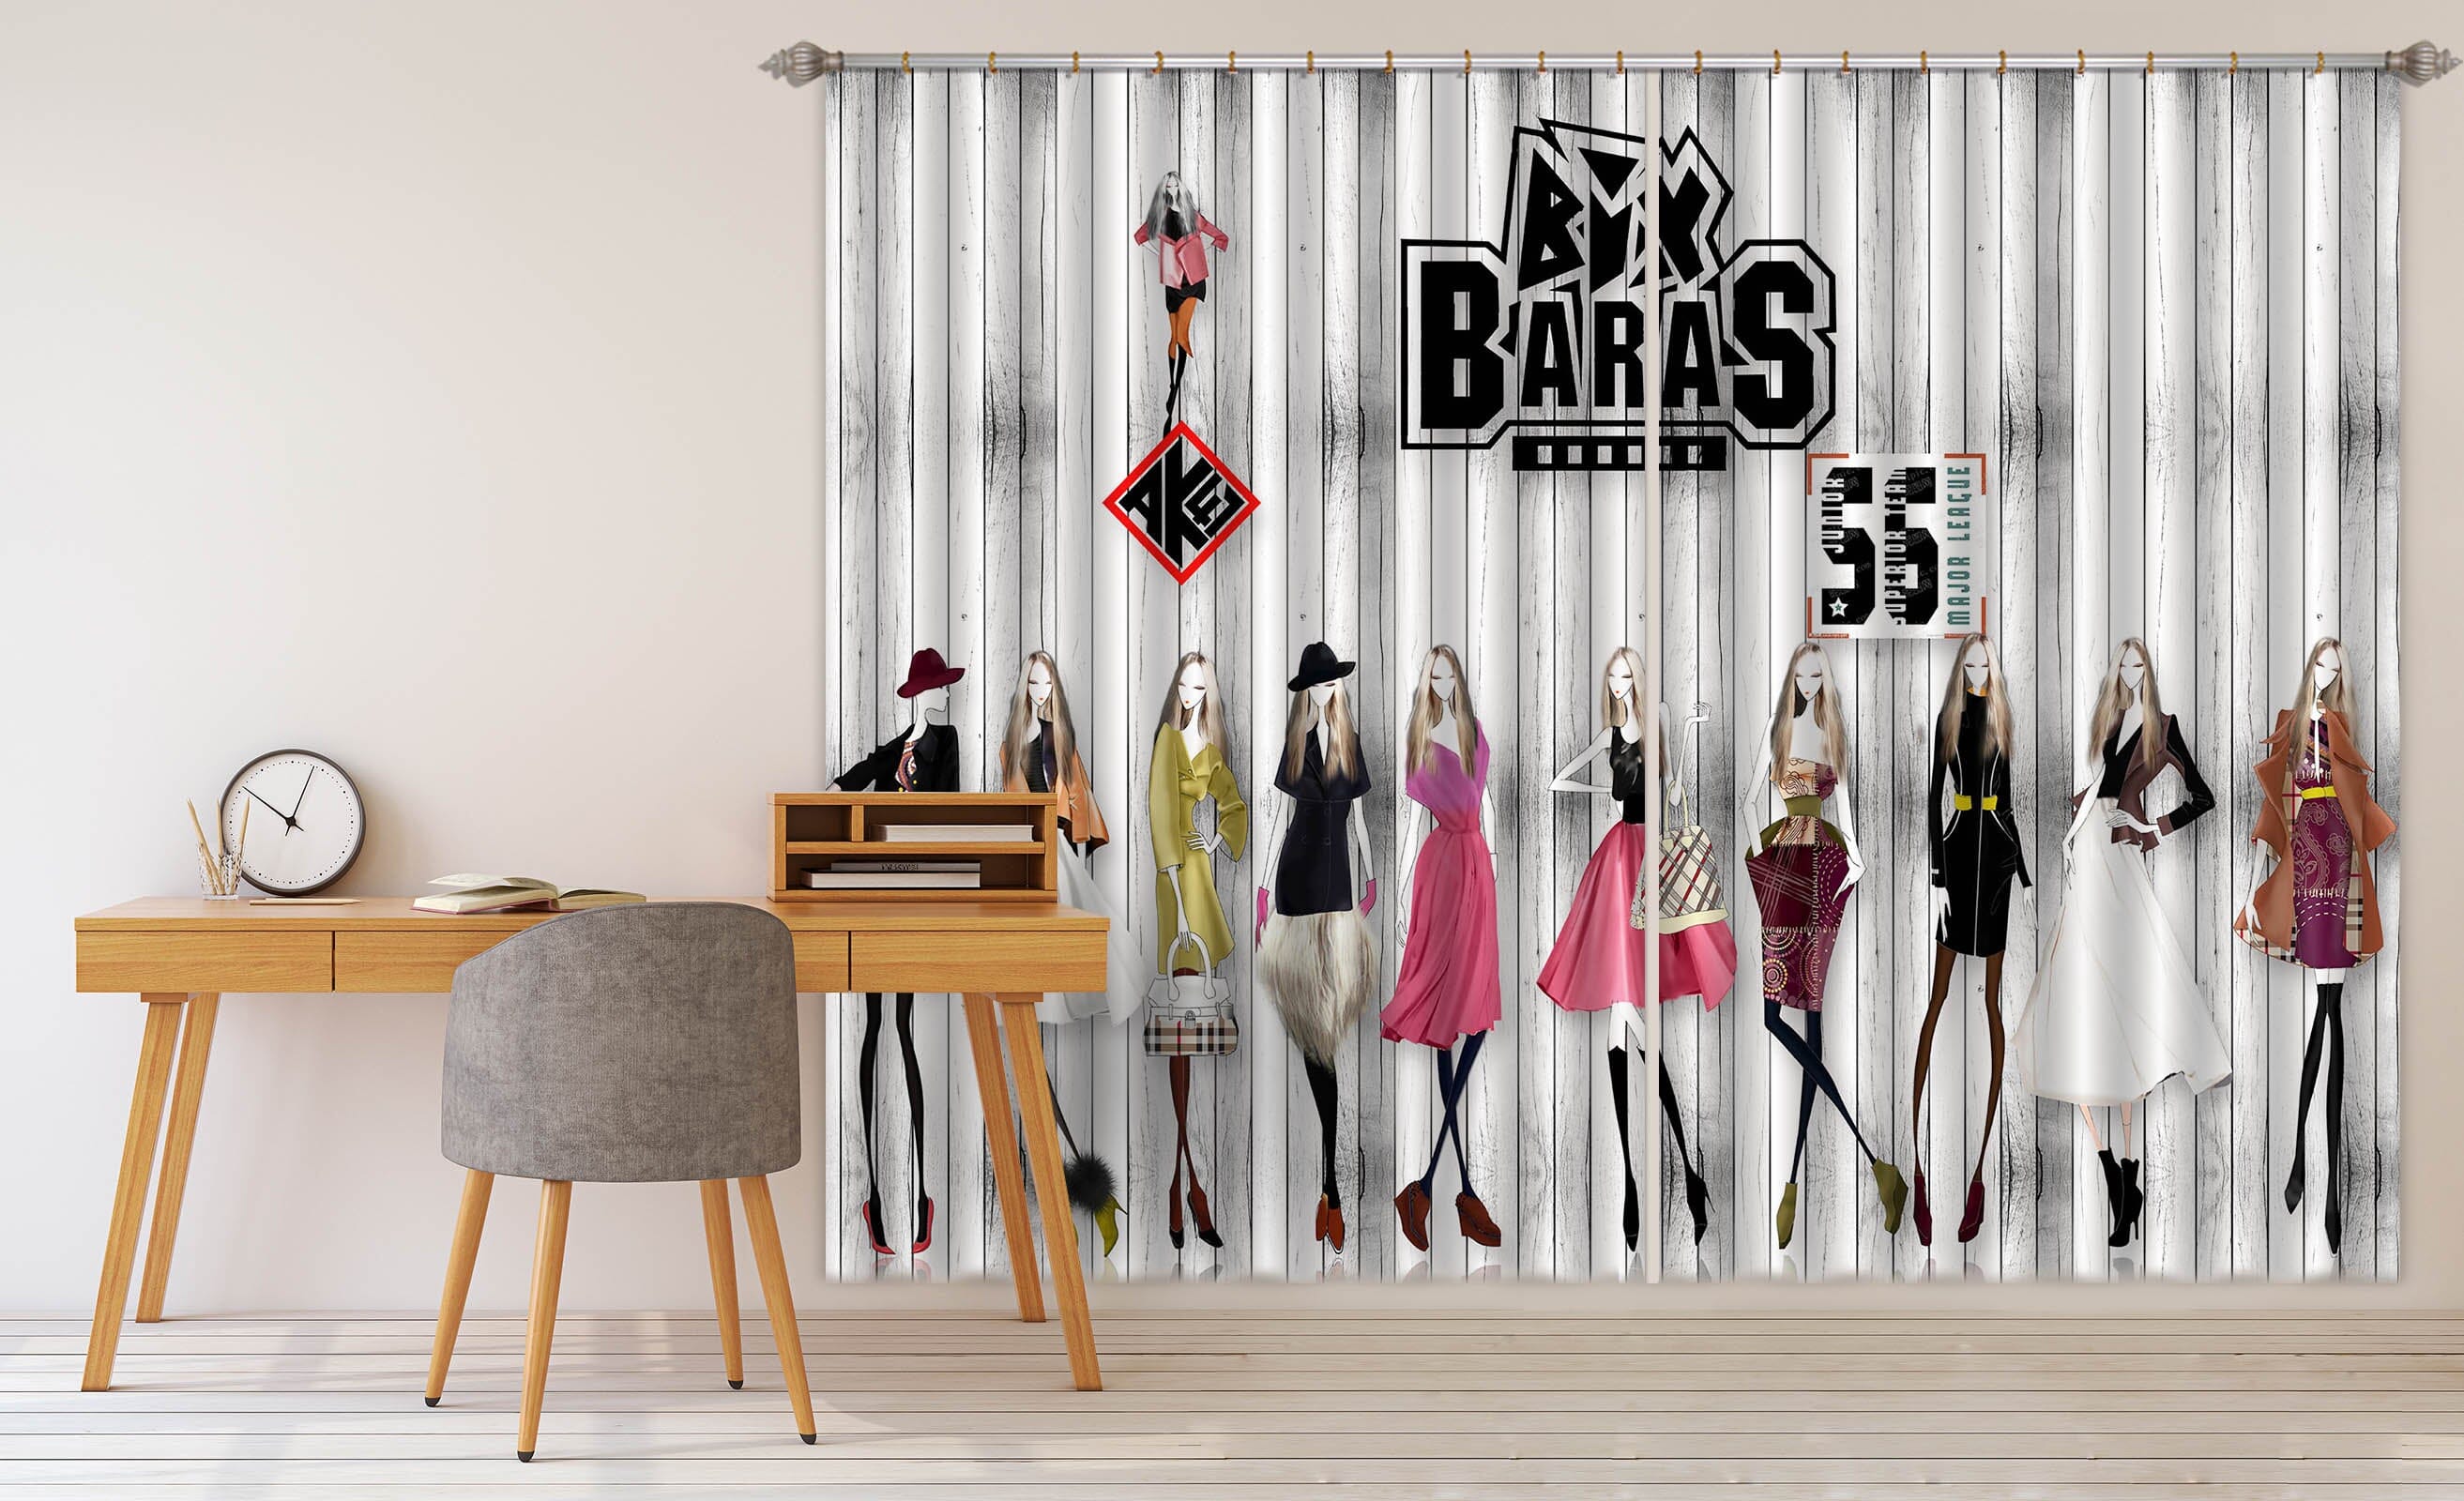 3D Fashion Girl 725 Curtains Drapes Wallpaper AJ Wallpaper 